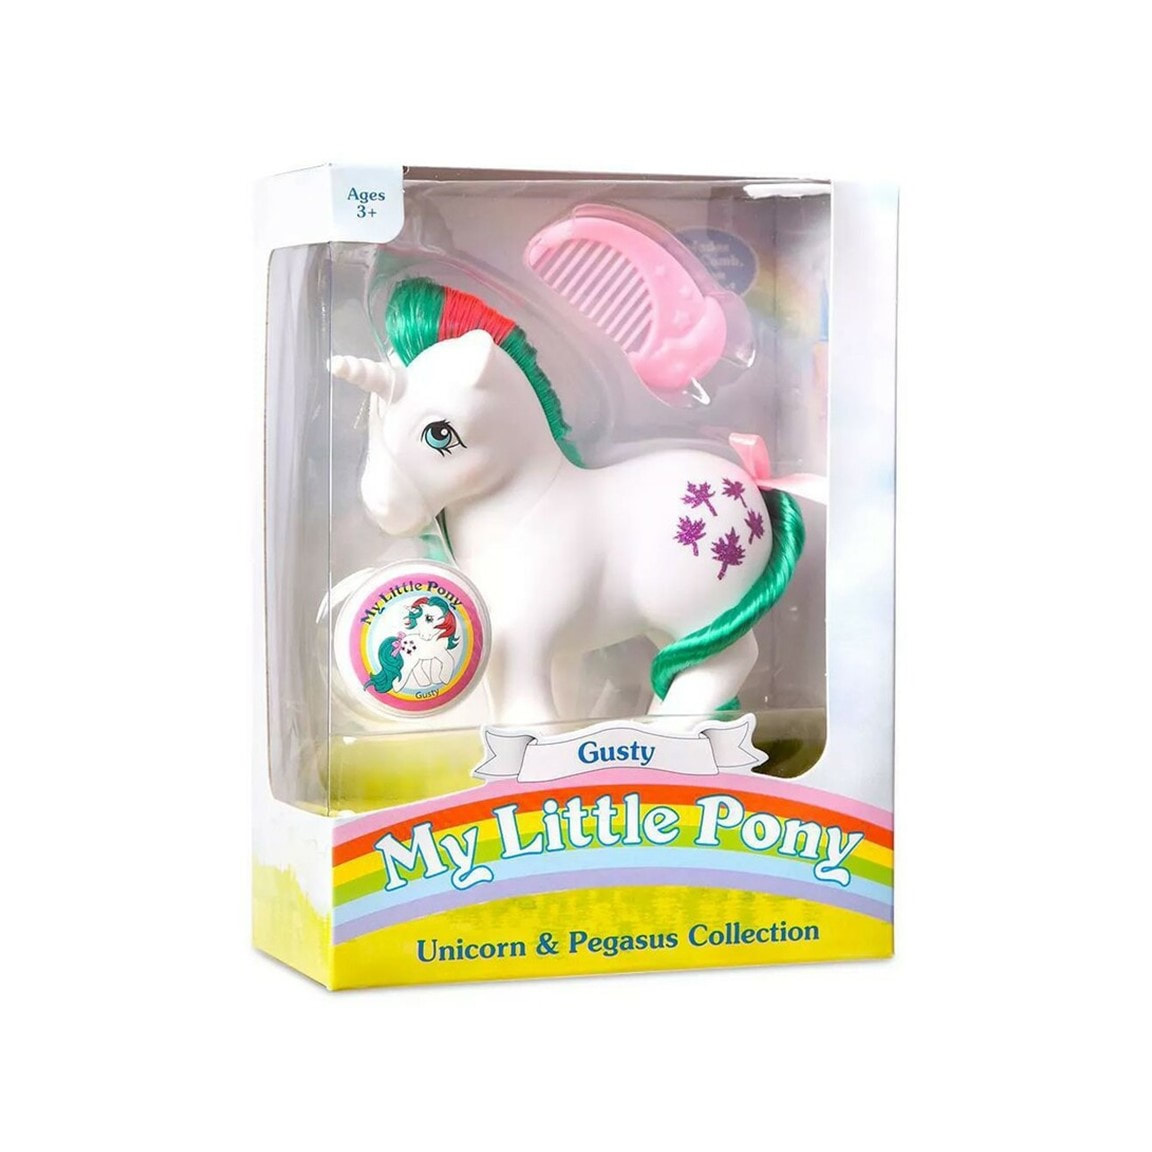 My Little Pony MLP 35th Anniversary unicorn Pegasus collection Ponies Set 4 New 